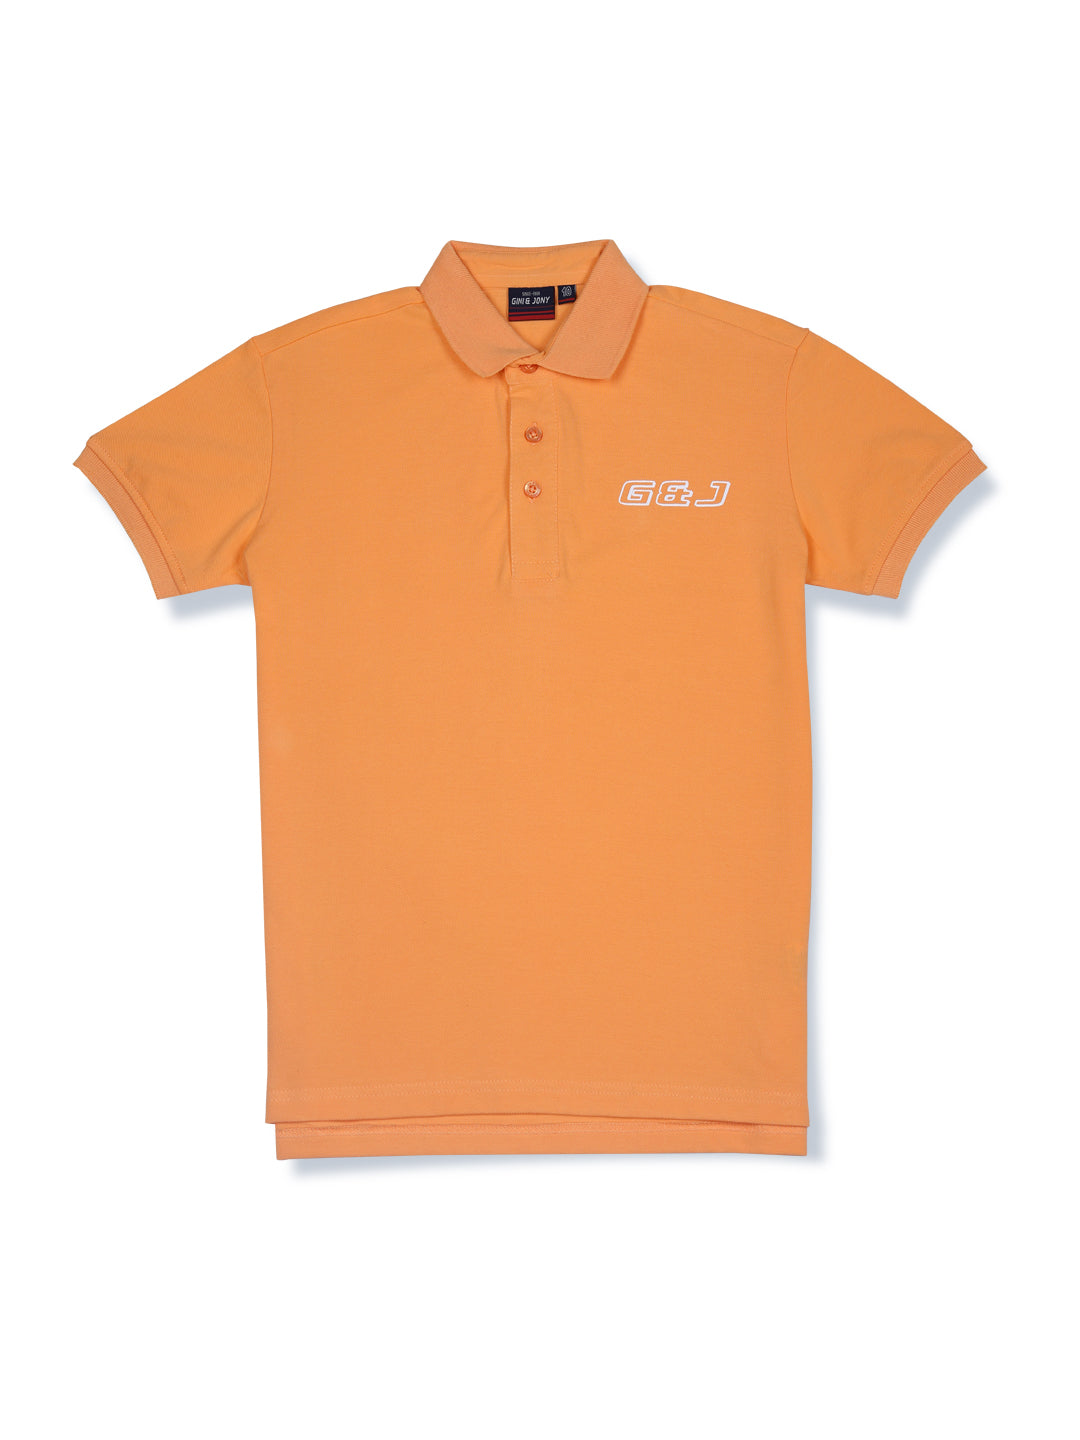 Boys Orange Solid Cotton Polo